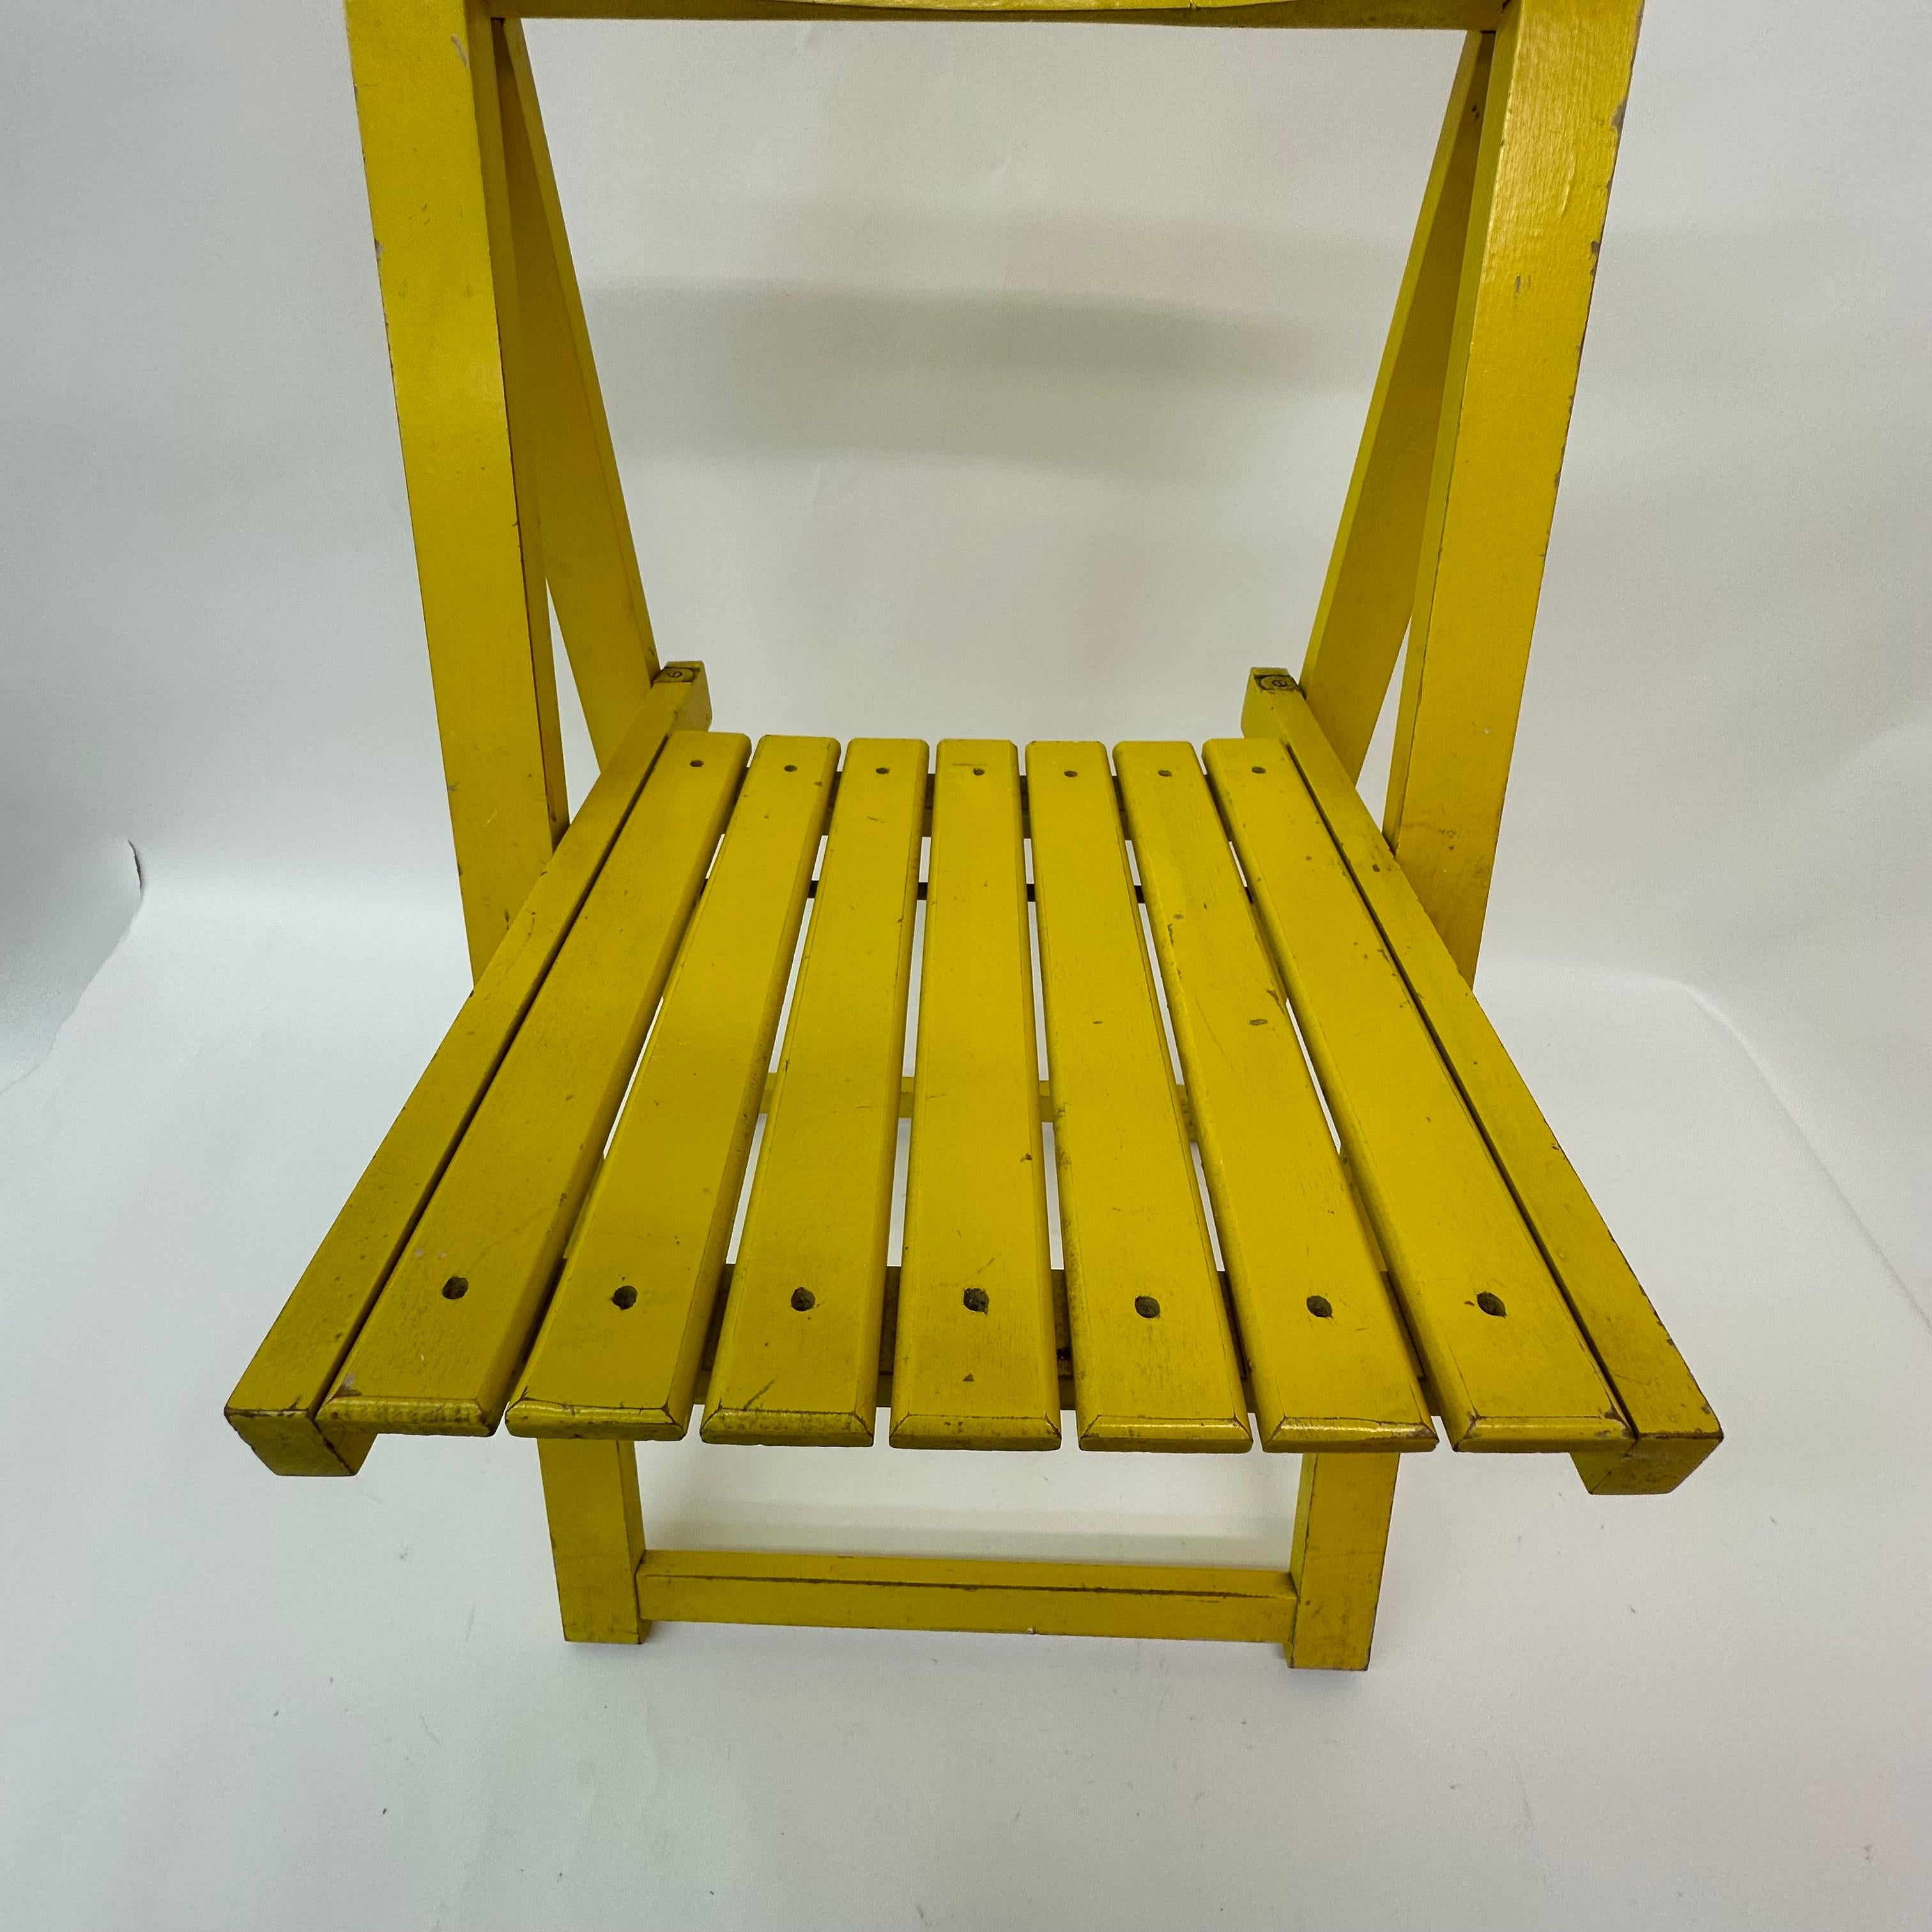 Aldo Jacober Folding Chair for Alberto Bazzani, 1960’s For Sale 14